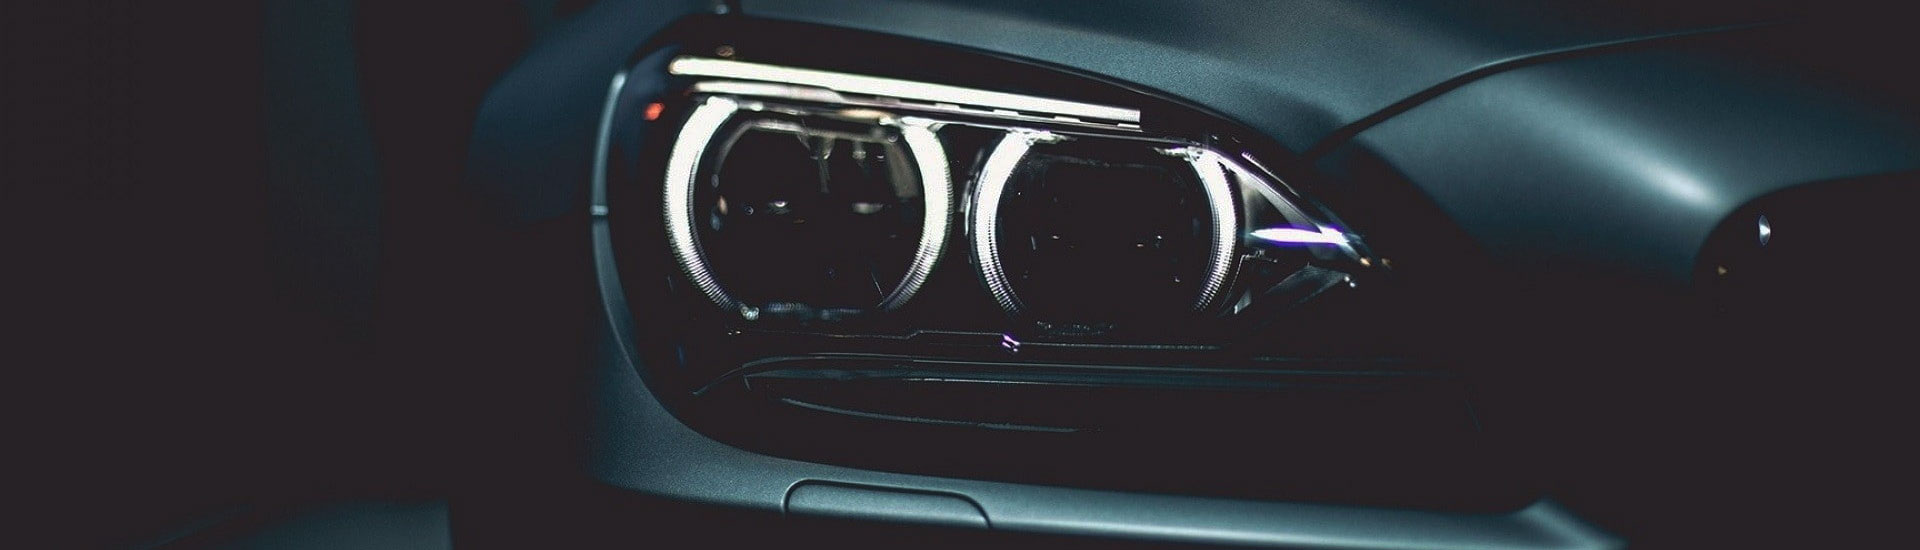 2020 BMW i3 Headlight Tint Covers